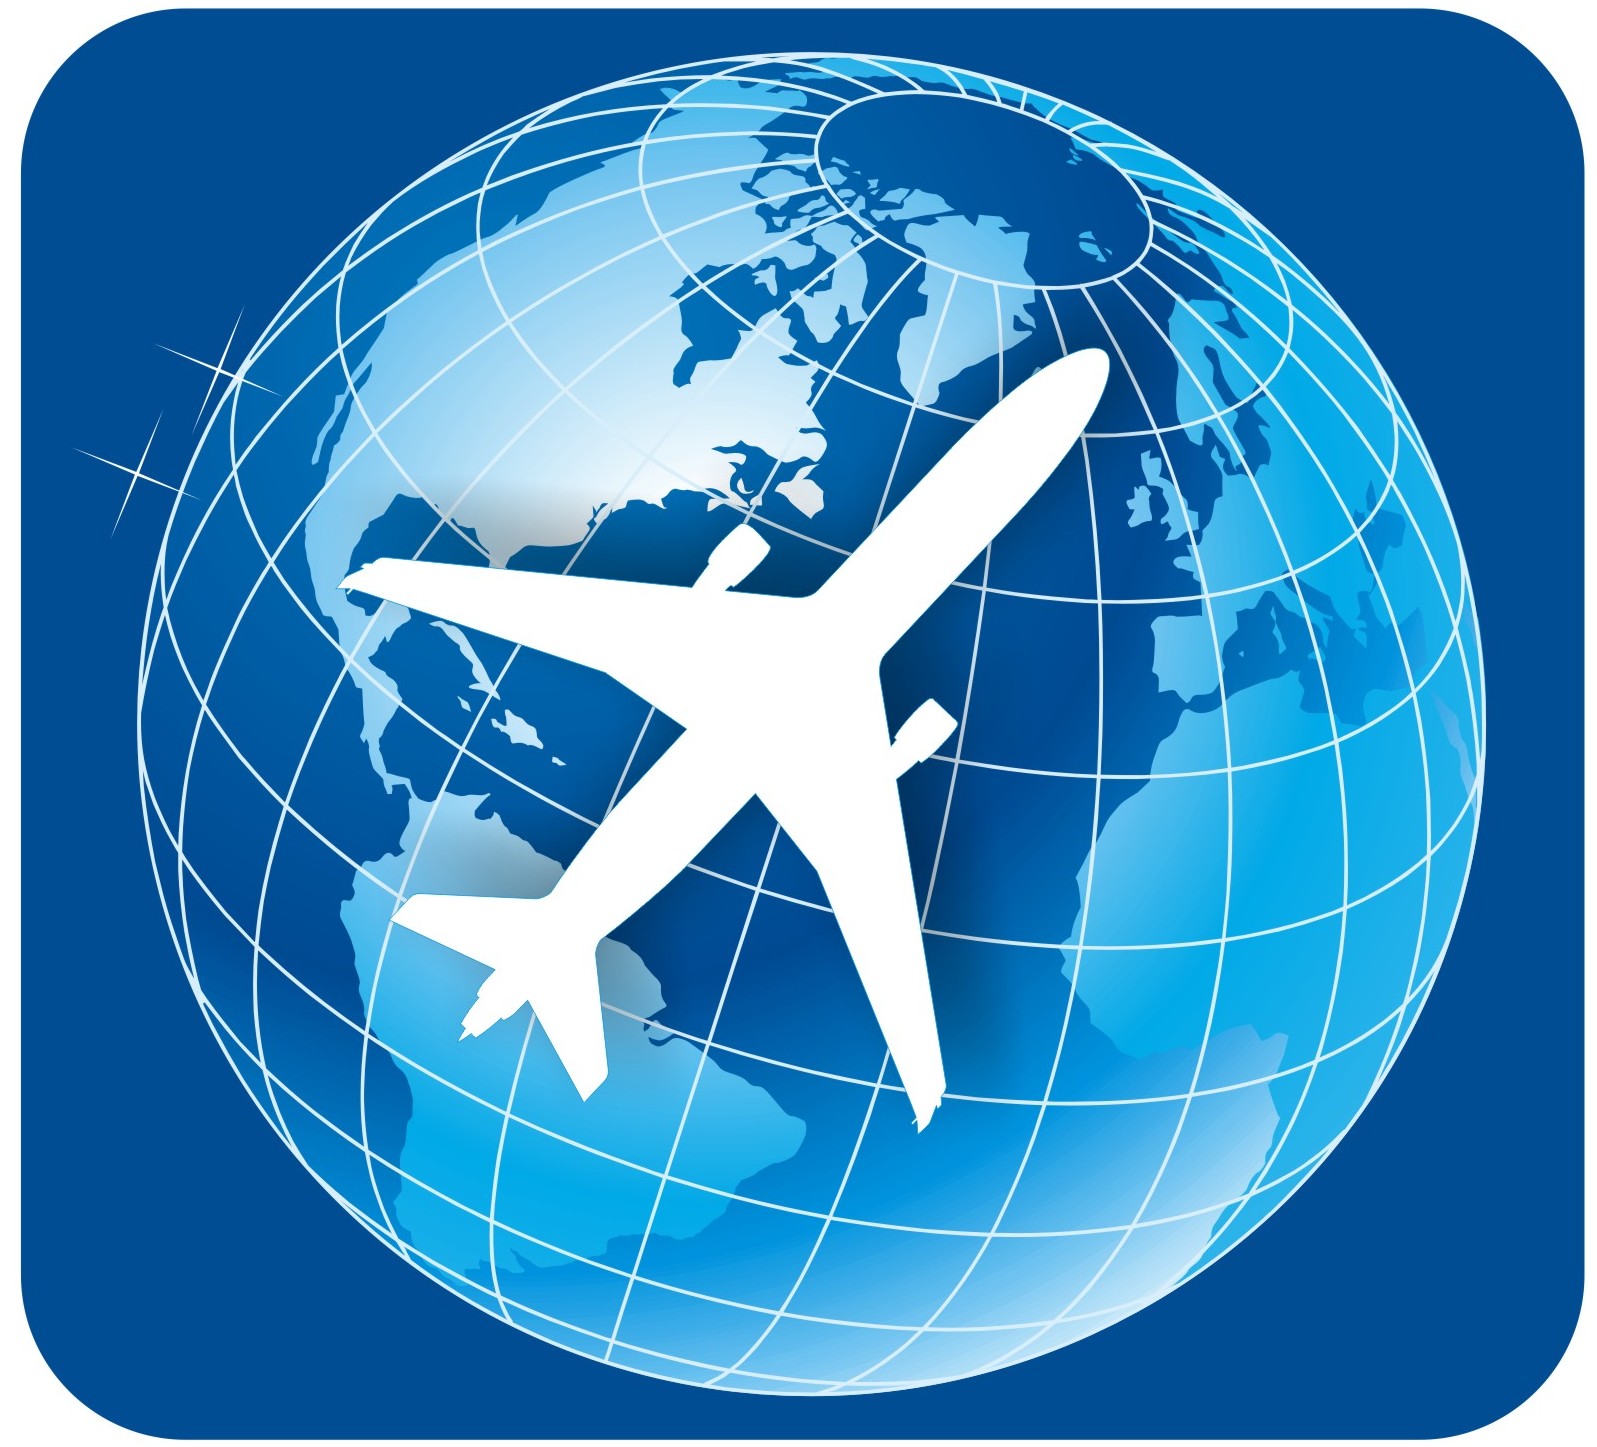 MyFlightInfo - Step Ahead and Enjoy Benefits of New iPhone Air Travel App